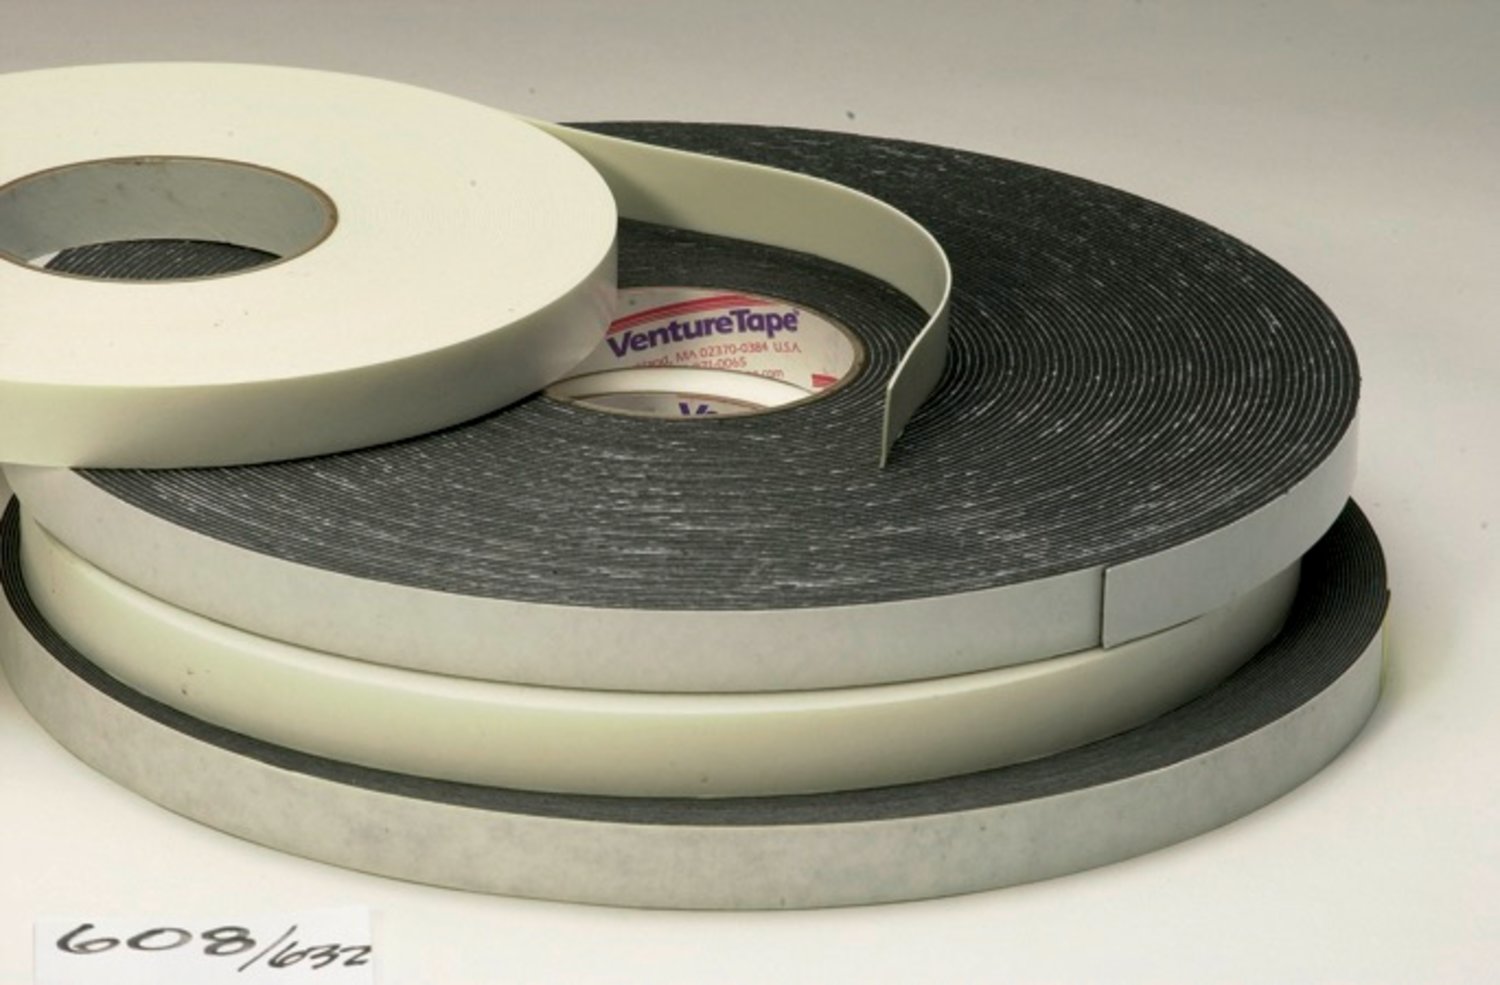 7010379959 - 3M Venture Tape Double Sided Polyethylene Foam Glazing Tape VG1208,
White, 1/2 in x 85 ft, 125 mil, 40 rolls per case